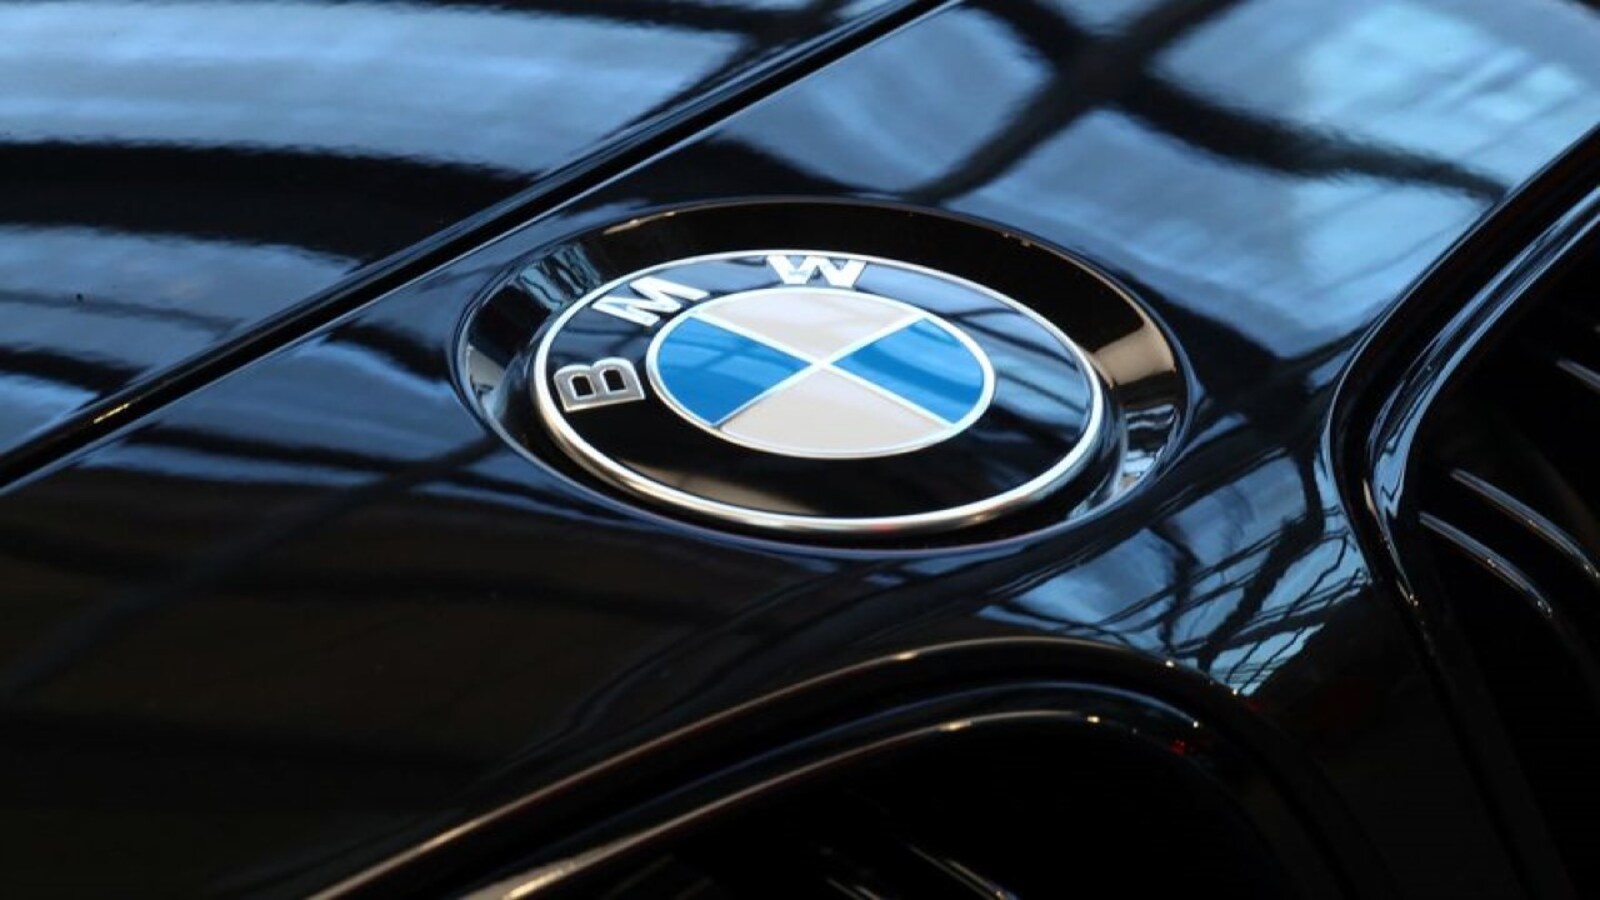 BMW cuts 2022 profit forecast for car segment due to Ukraine war